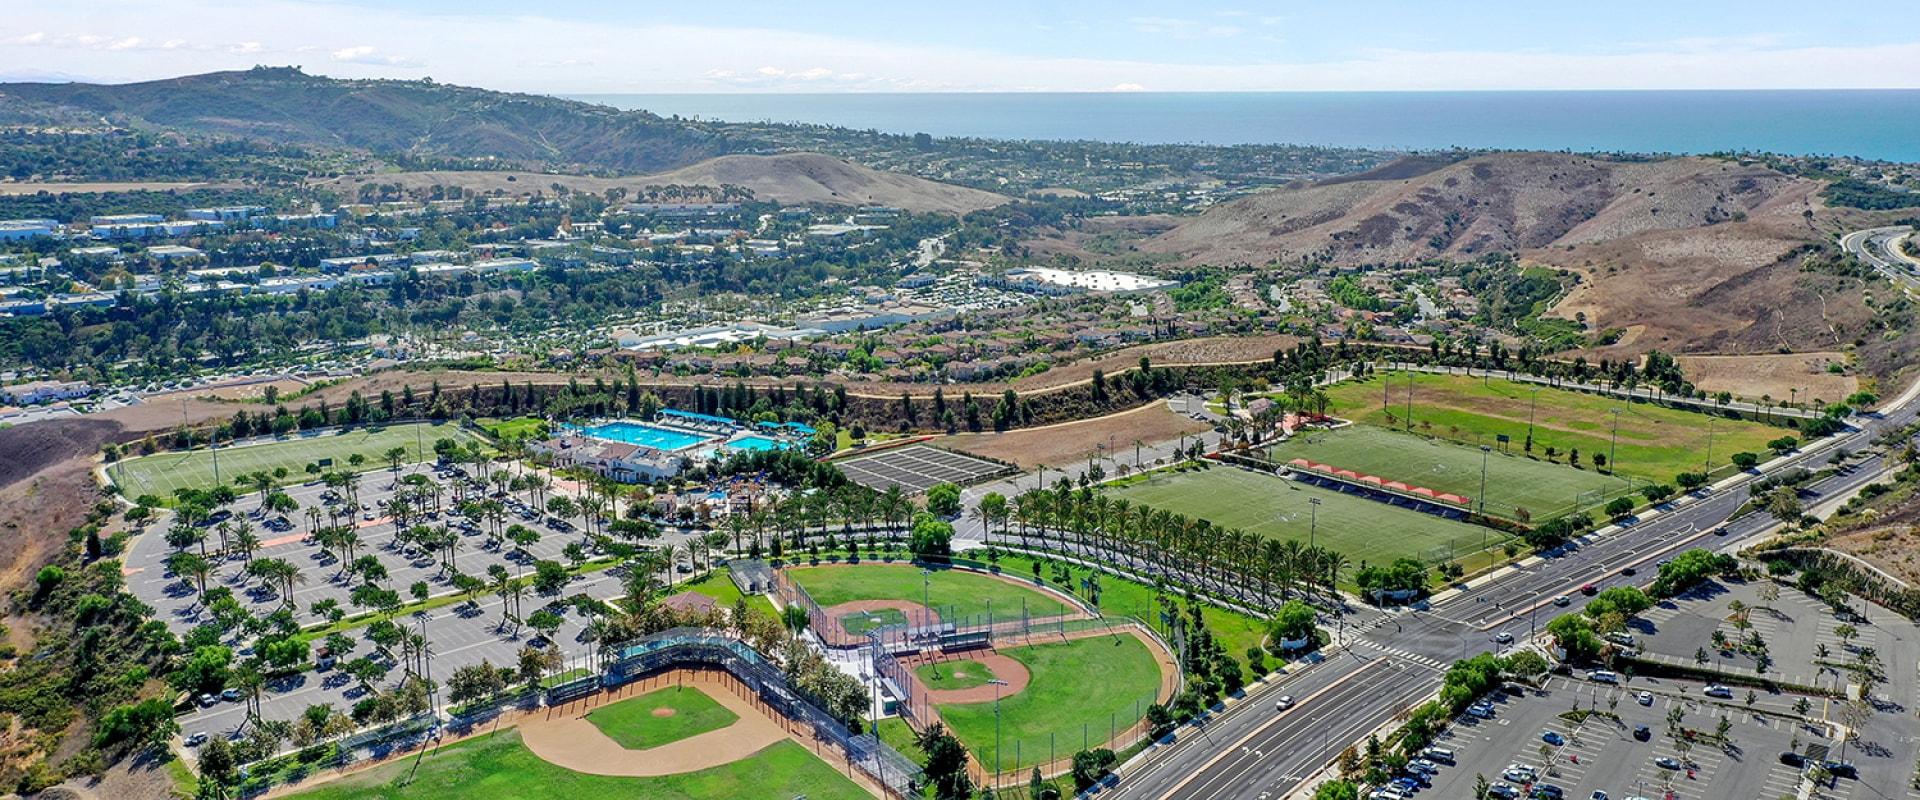 Vista Hermosa Sports Park - San Clemente - Summers Murphy & Partners